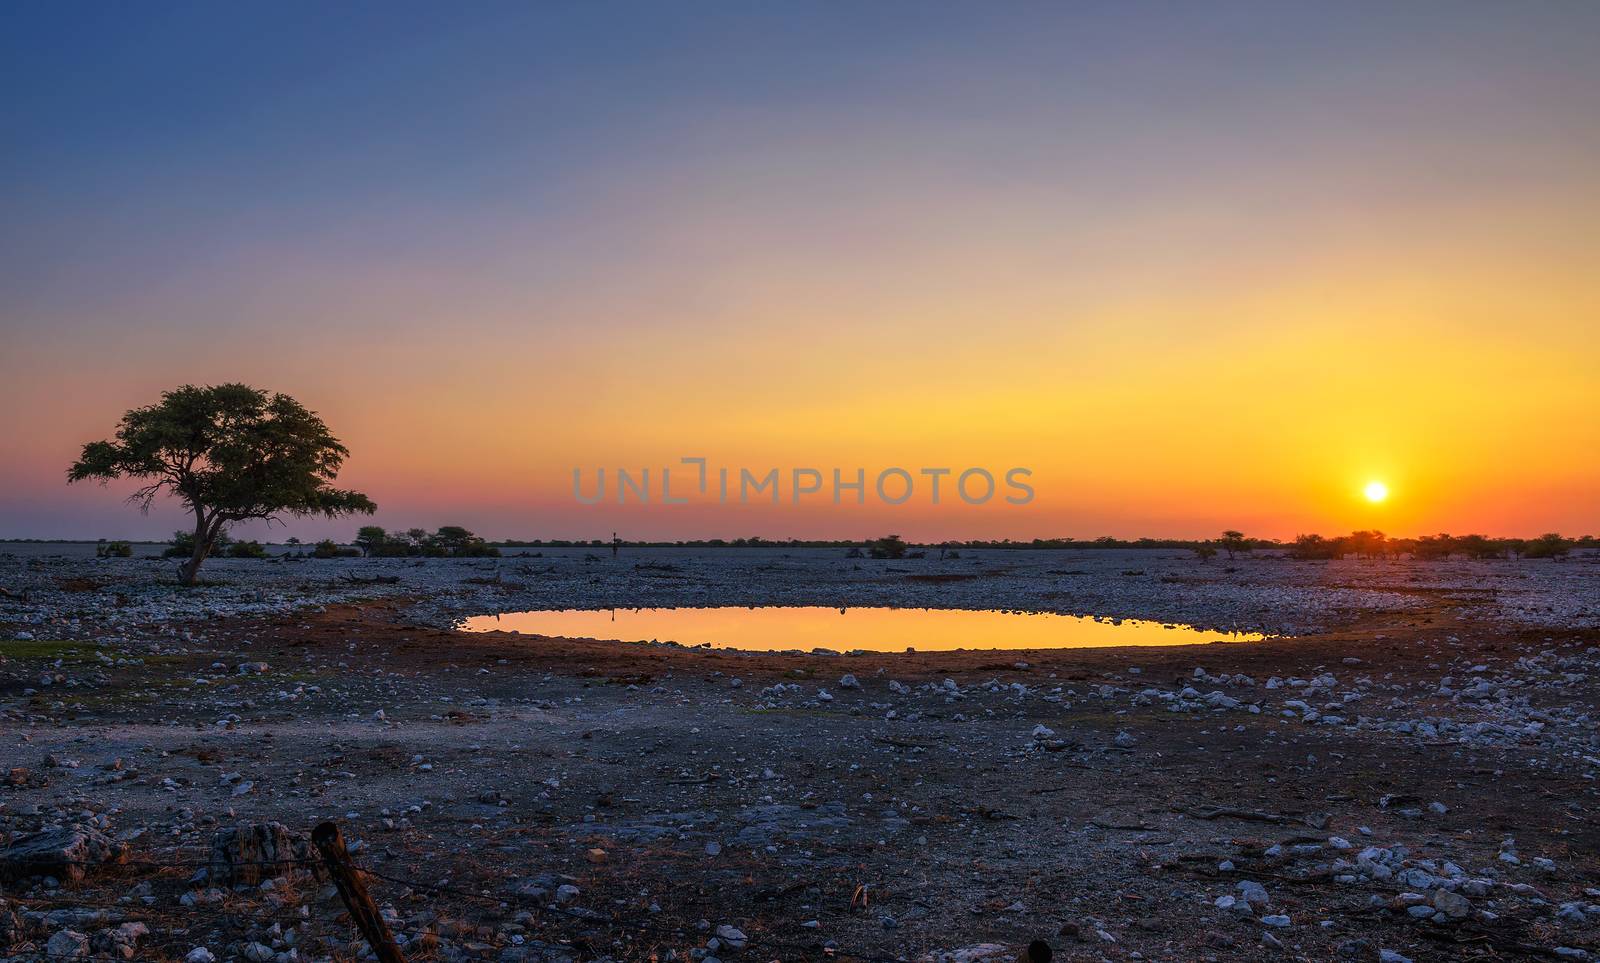 Sunset over the waterhole of Okaukuejo Camp in Etosha, Namibia by nickfox